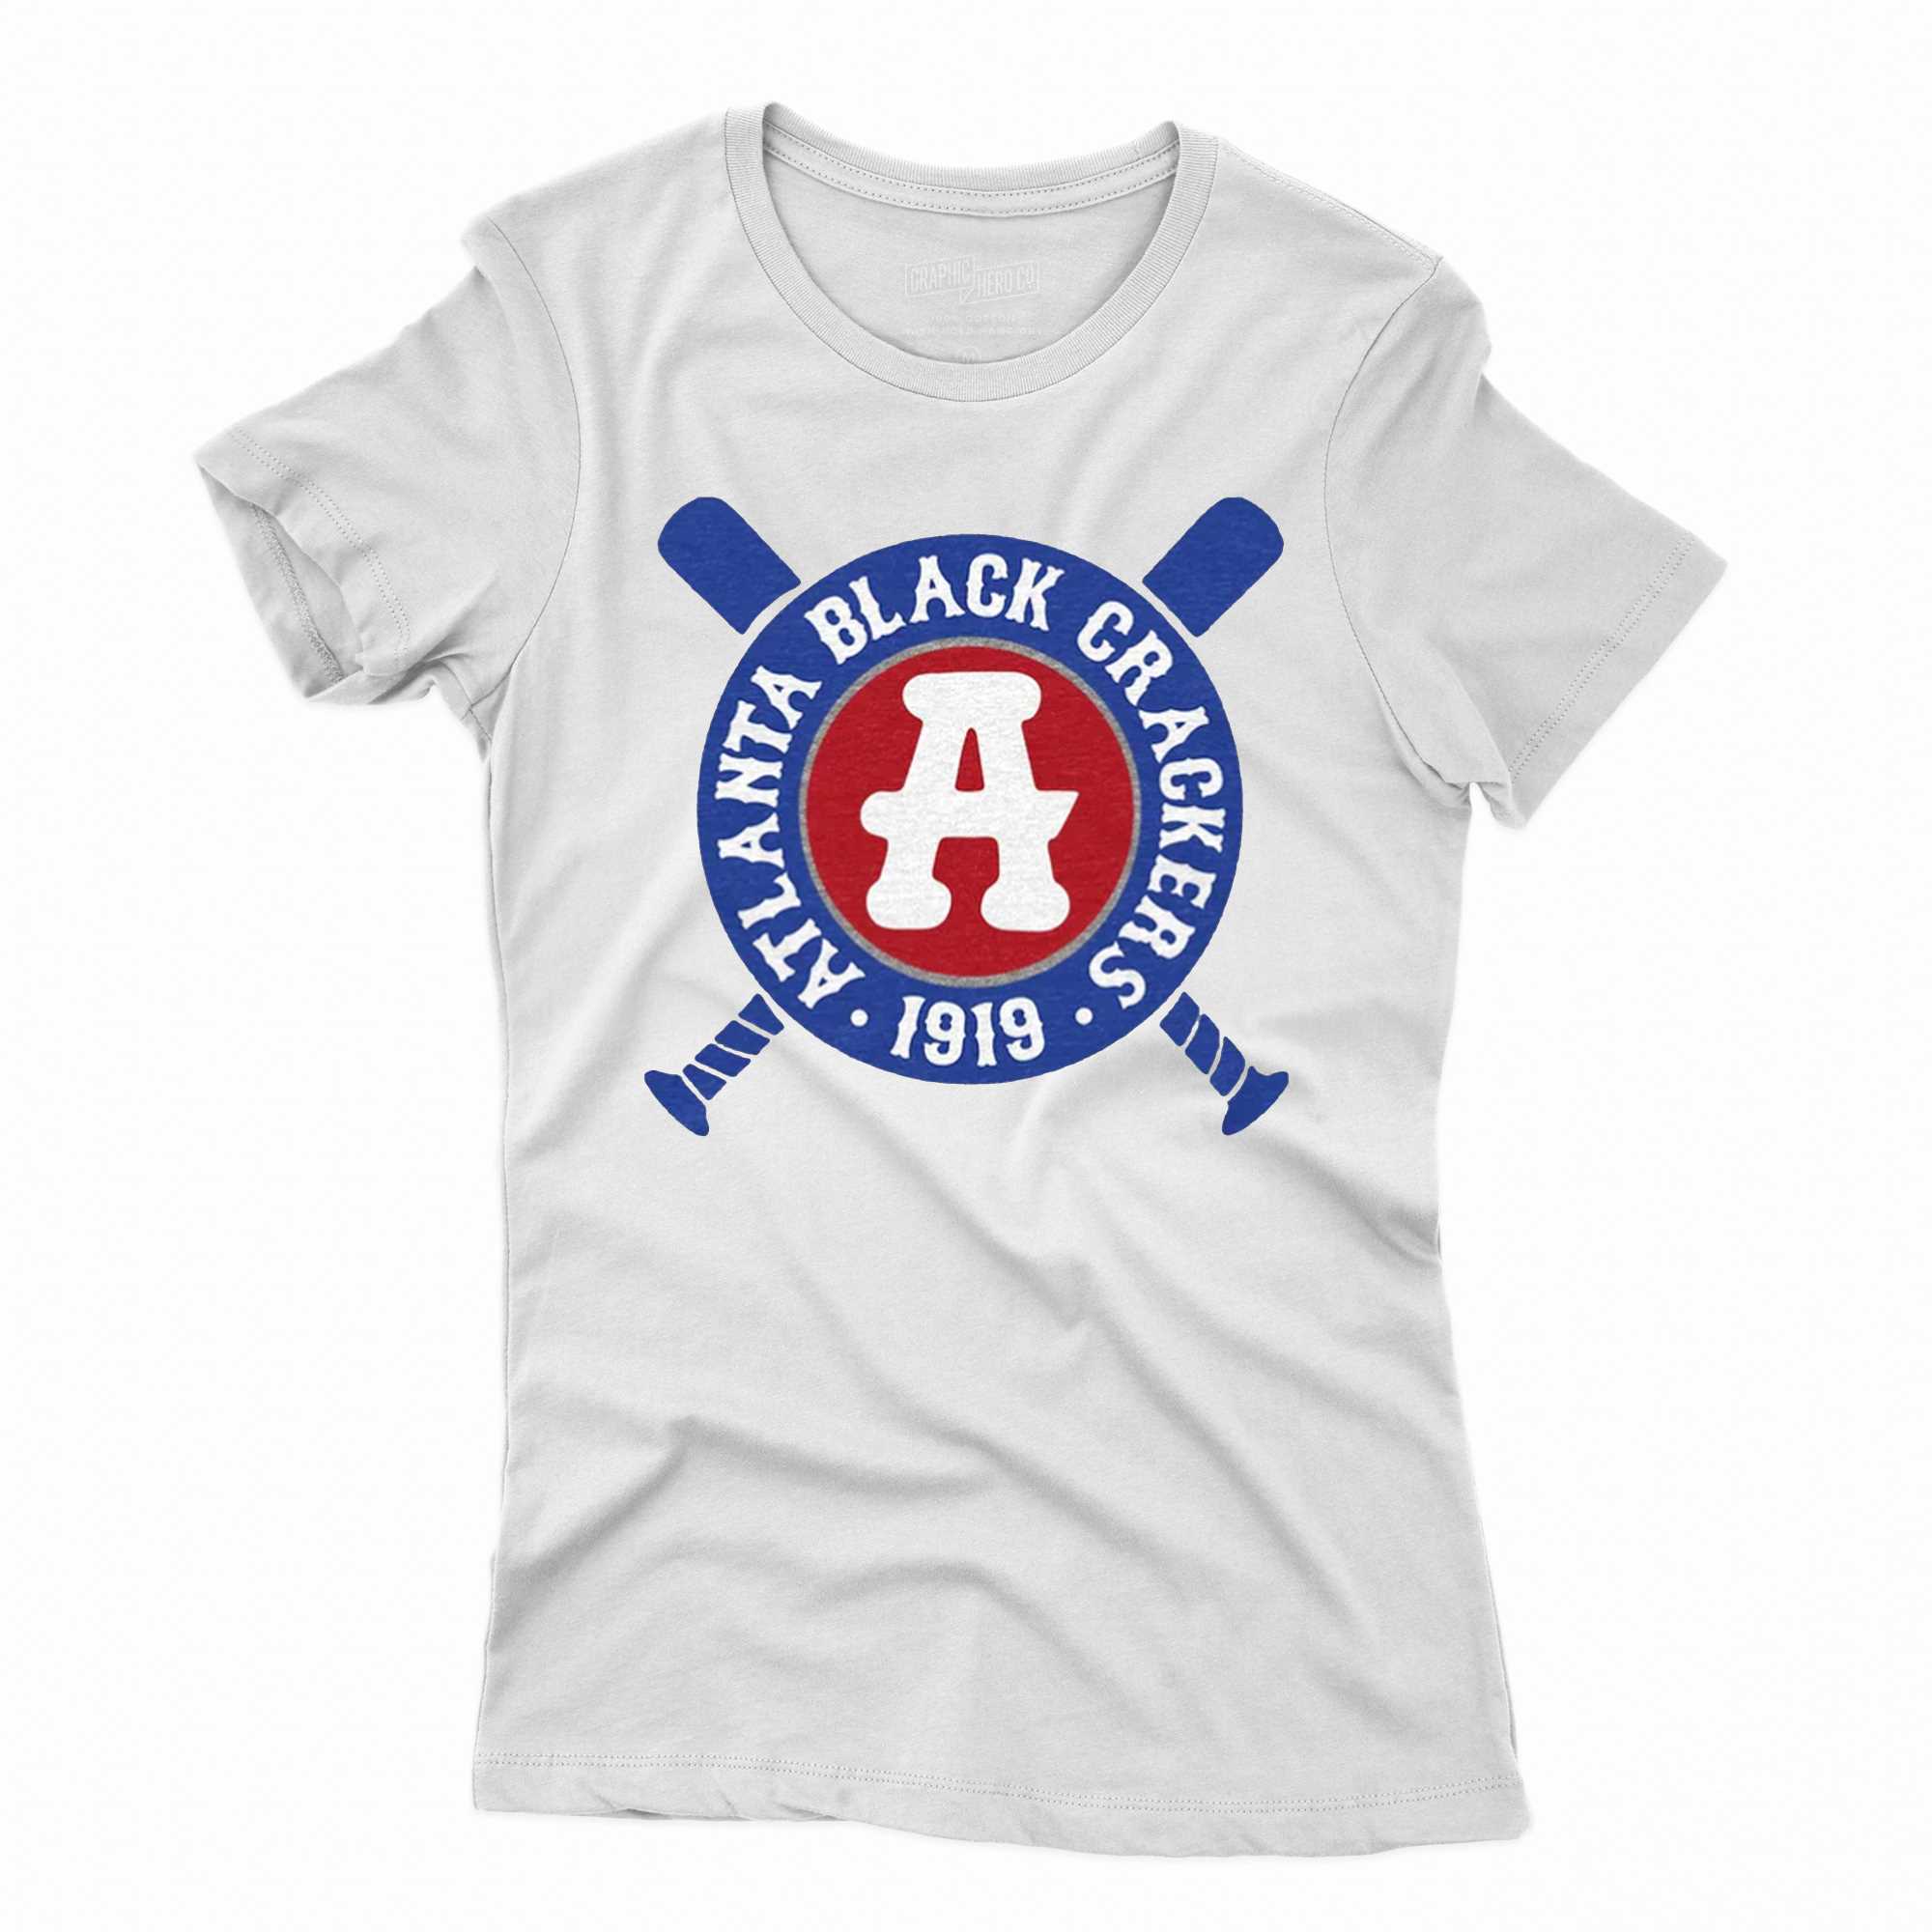 Atlanta Black Crackers Baseball T-shirt